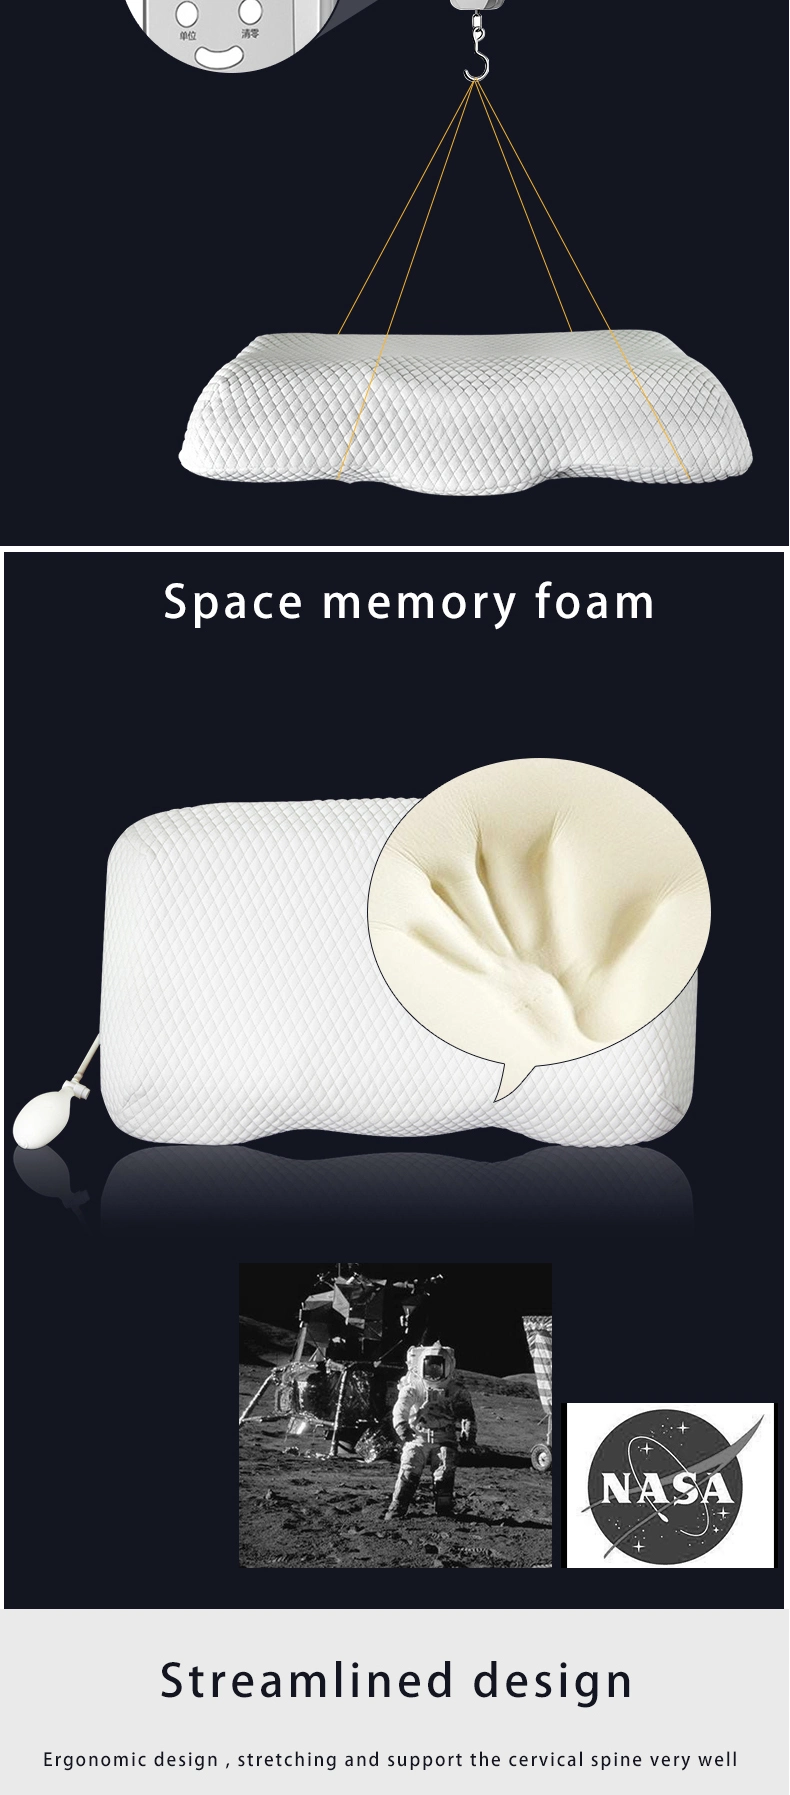 Neck Protection Hight Adjustable Memory Foam Body Sleeping Neck Pillow